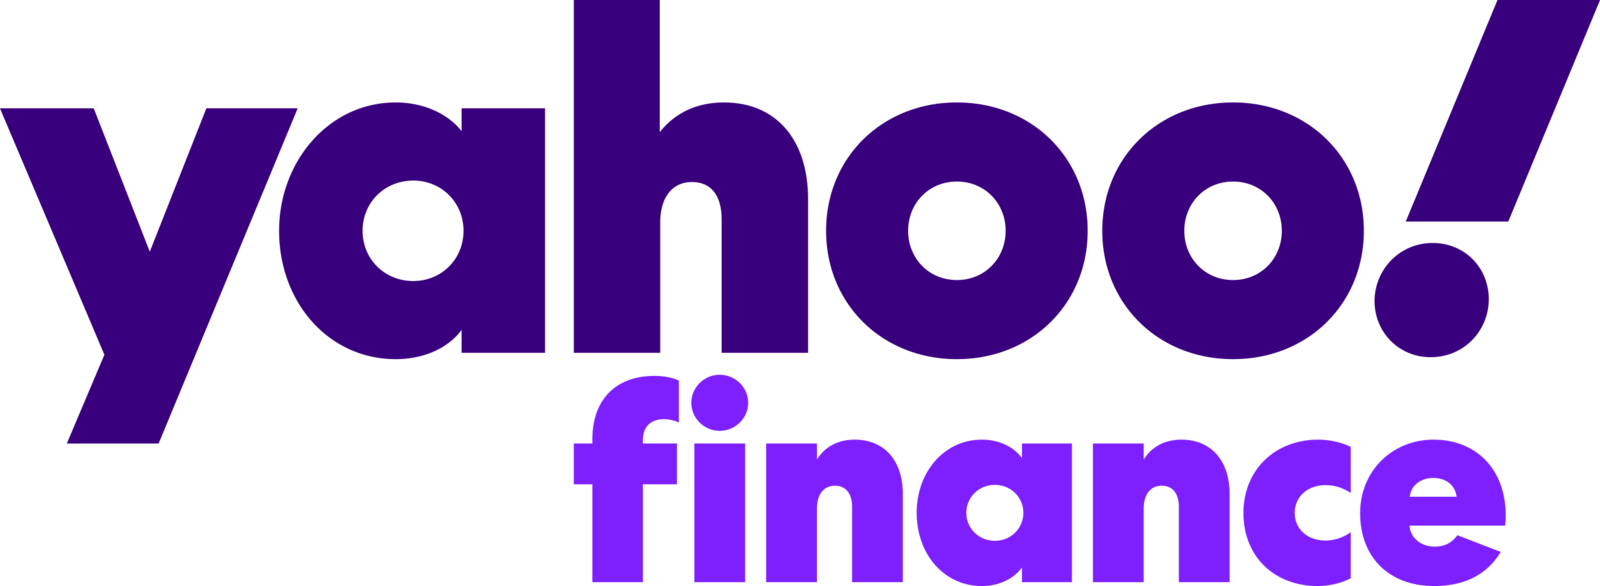 File:Yahoo! Finance logo 2021.png - Wikipedia